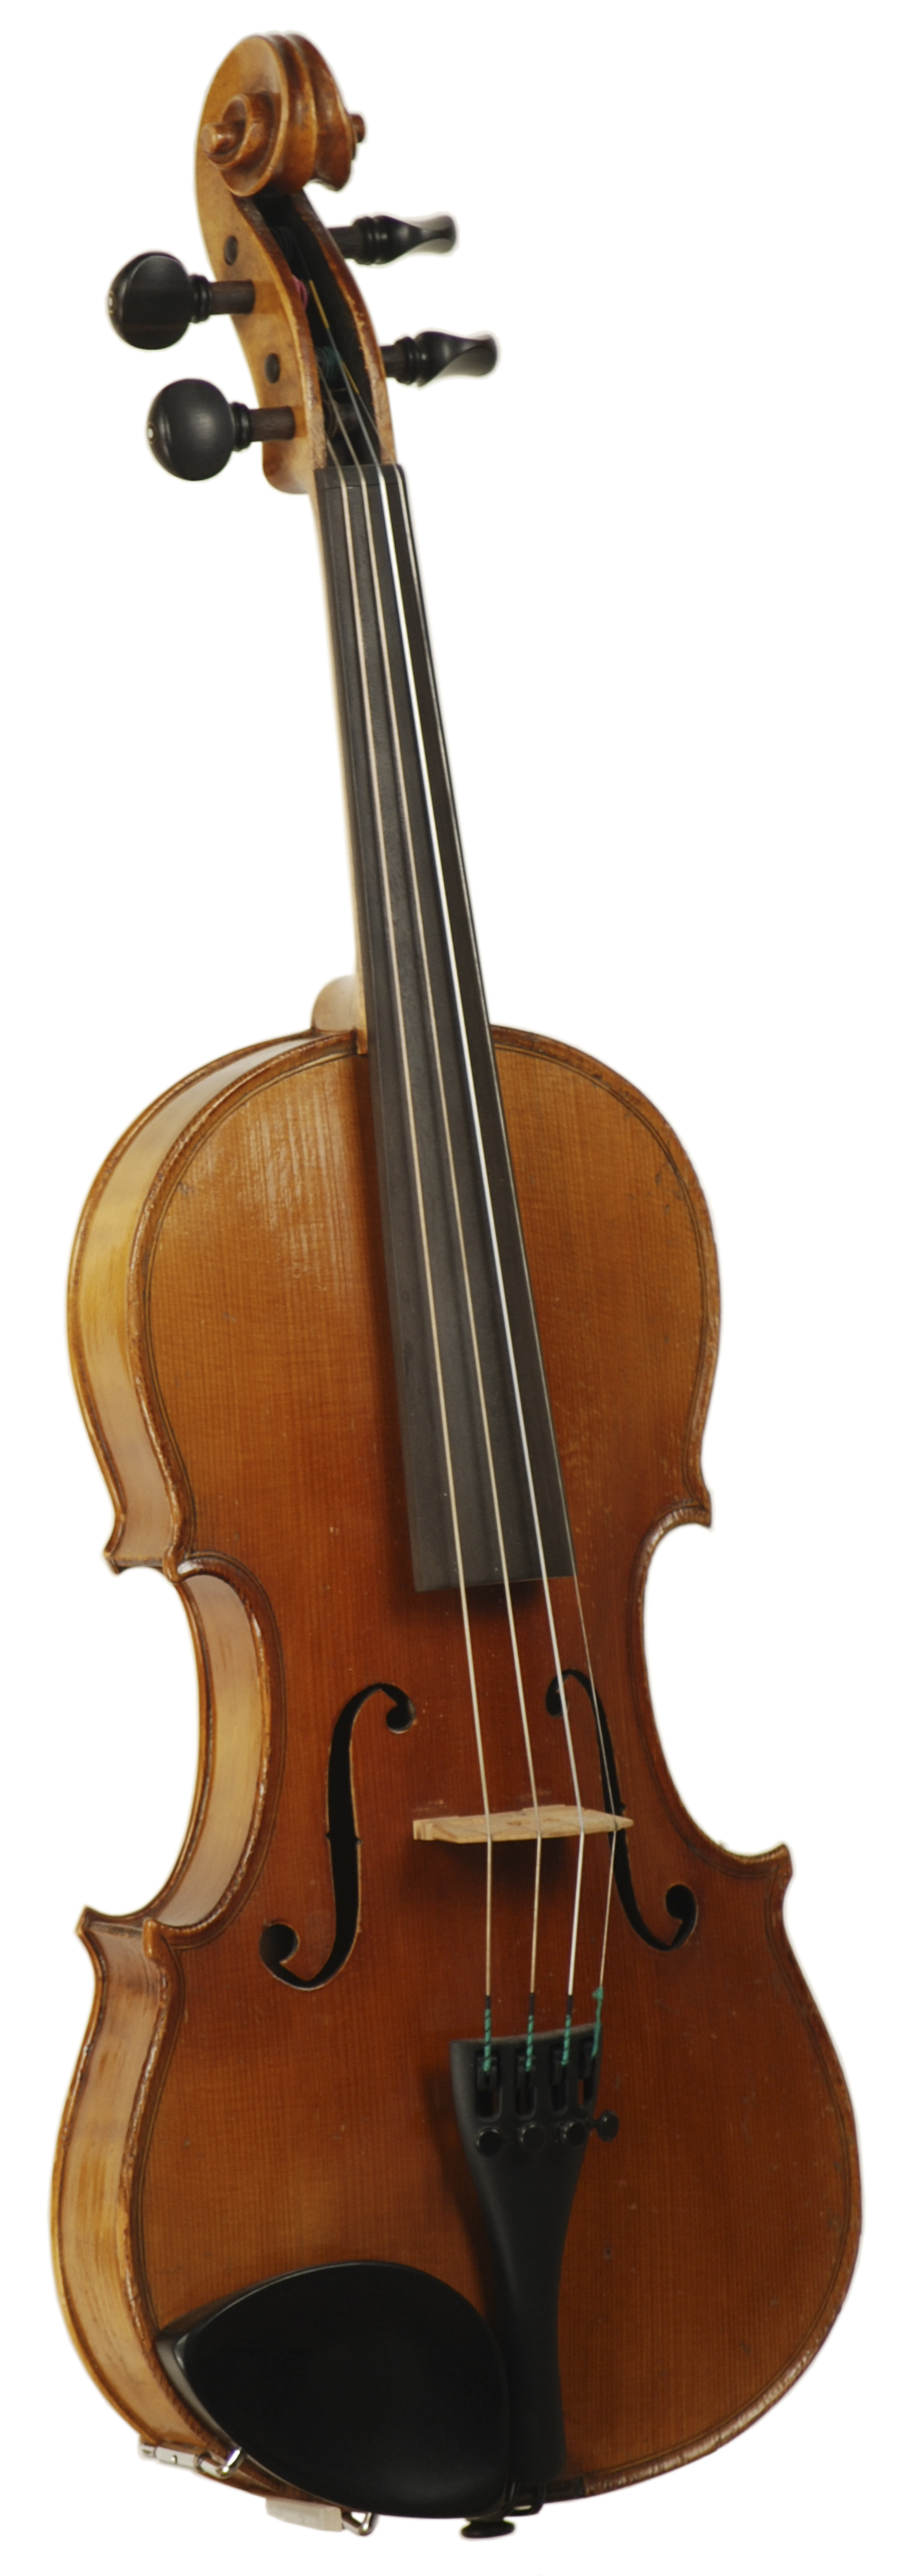 Neuner & Hornsteiner 3/4 Size Violin | J.R. Judd Violins